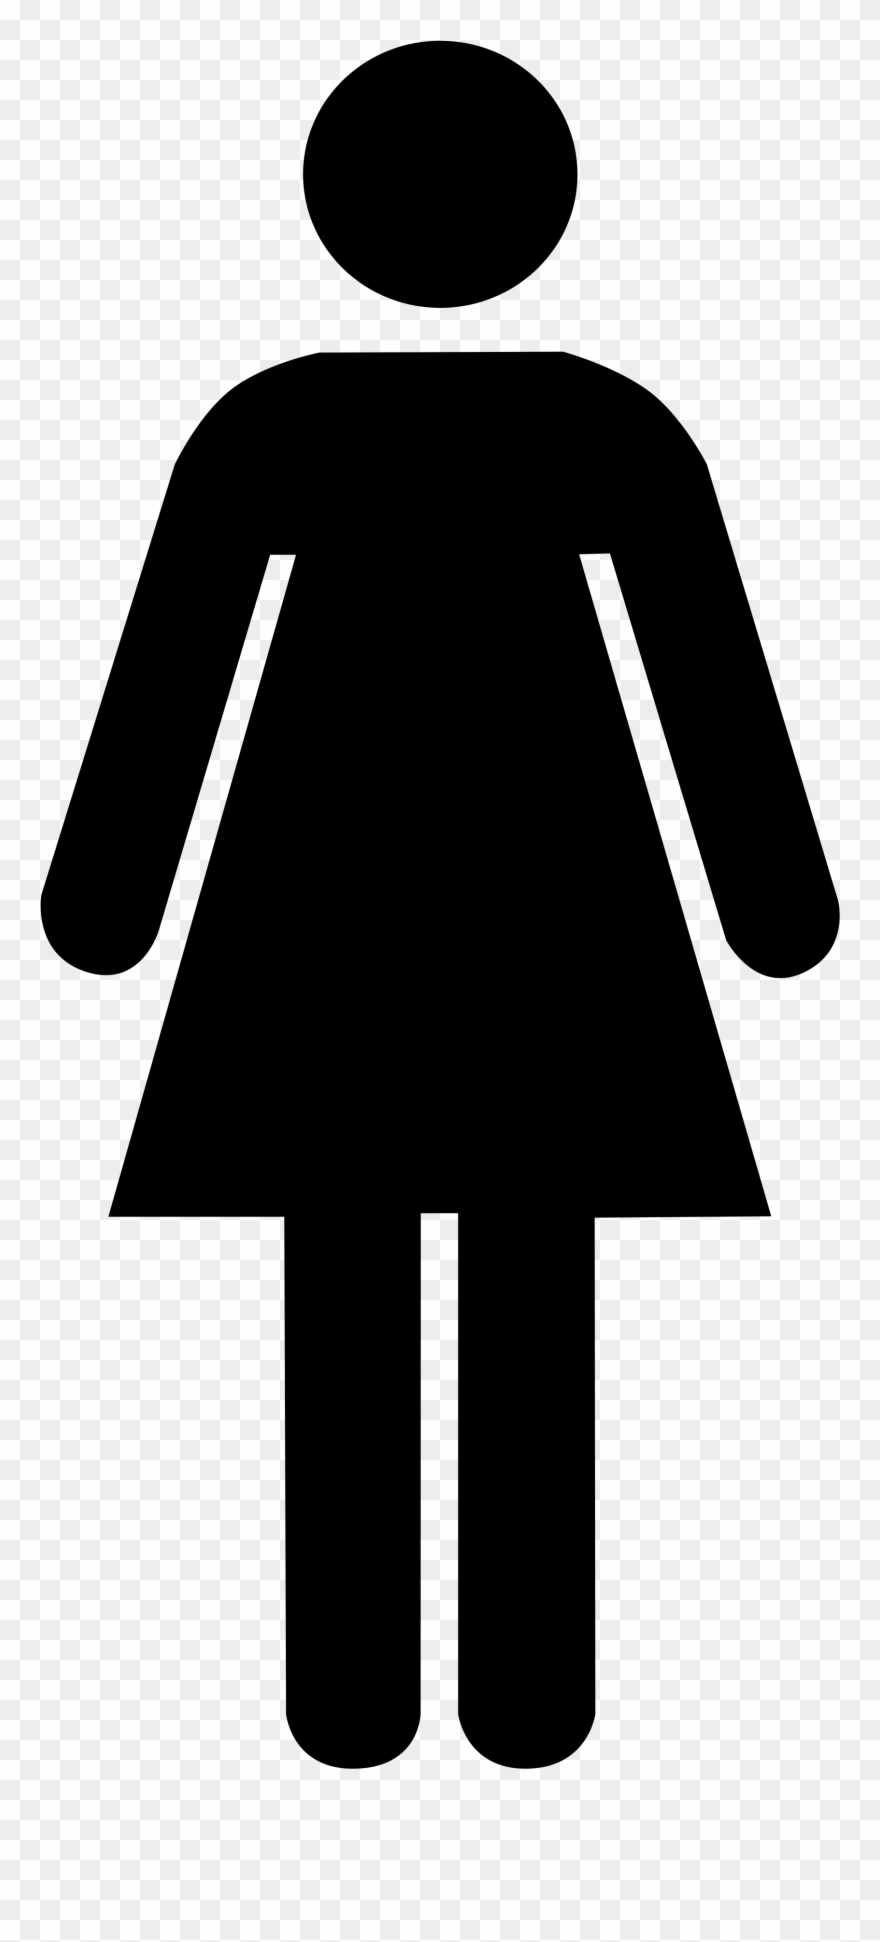 Woman bathroom sign.